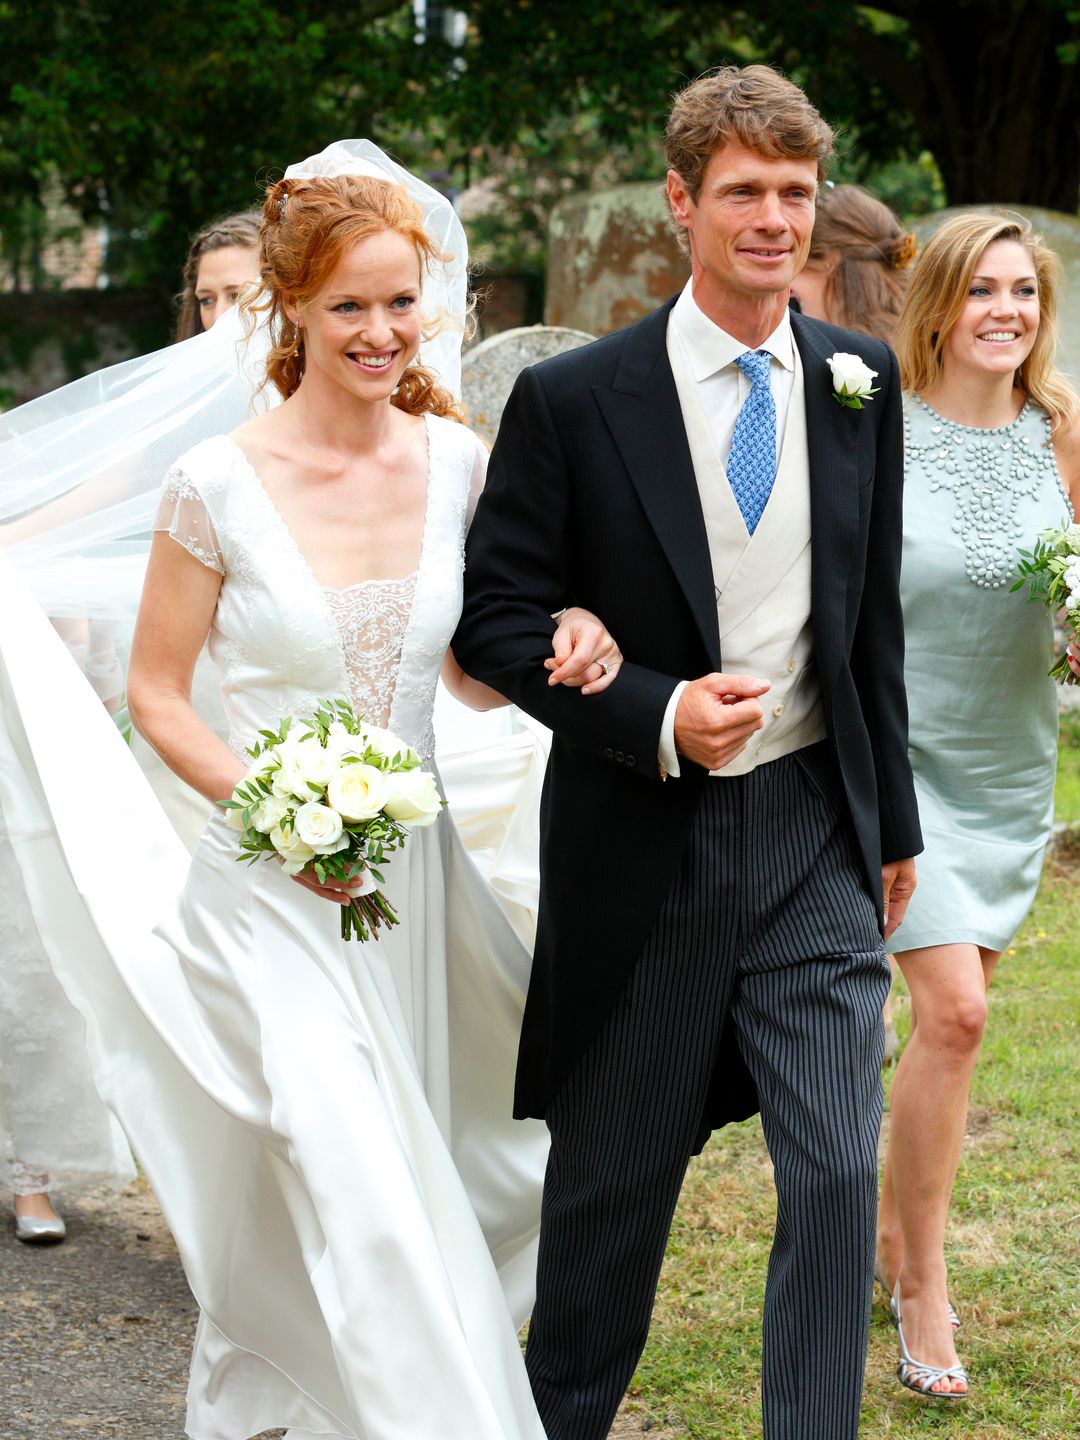 Alicia Fox-Pitt in a wedding gown walking with William Fox-Pitt